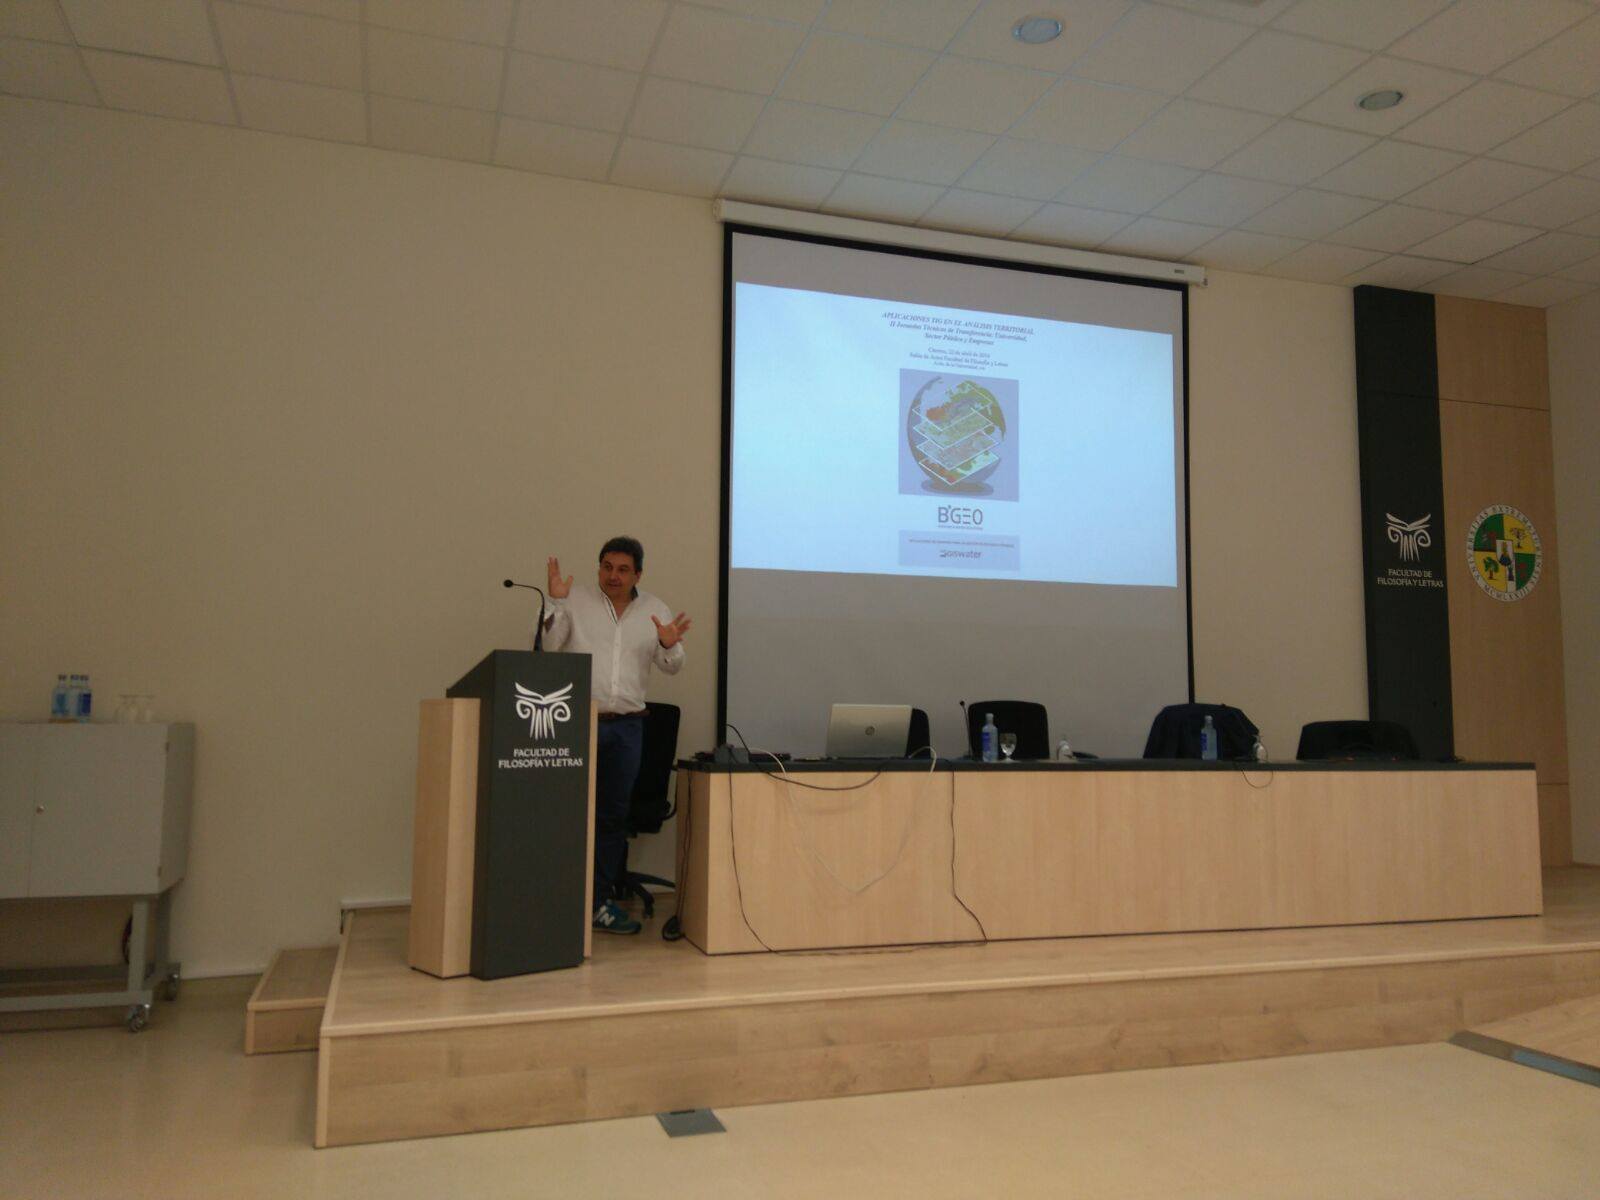 BGEO presented Giswater at the university of Extremadura